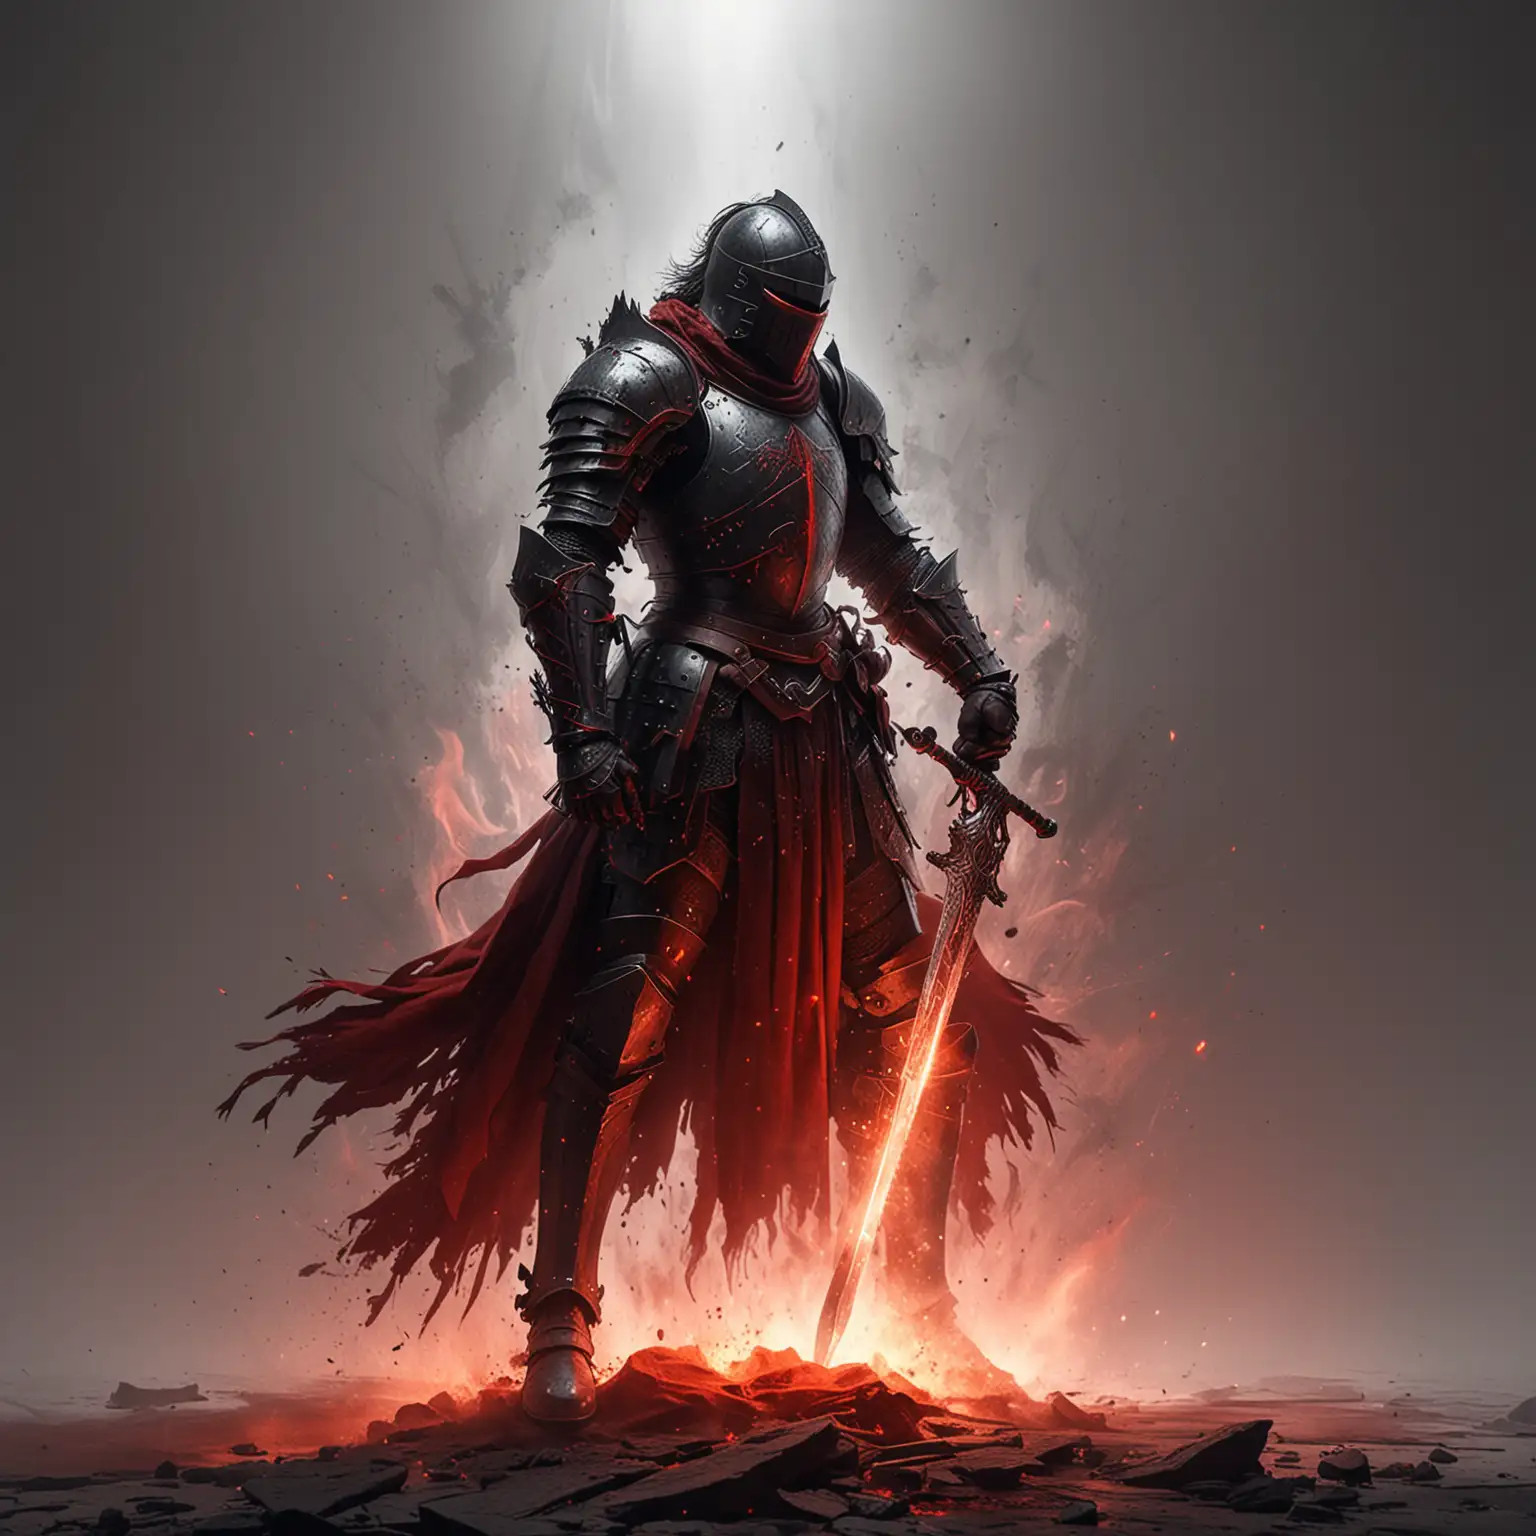 Knight Kneeling with Glowing Red Sword in Smoke Detailed Digital Art